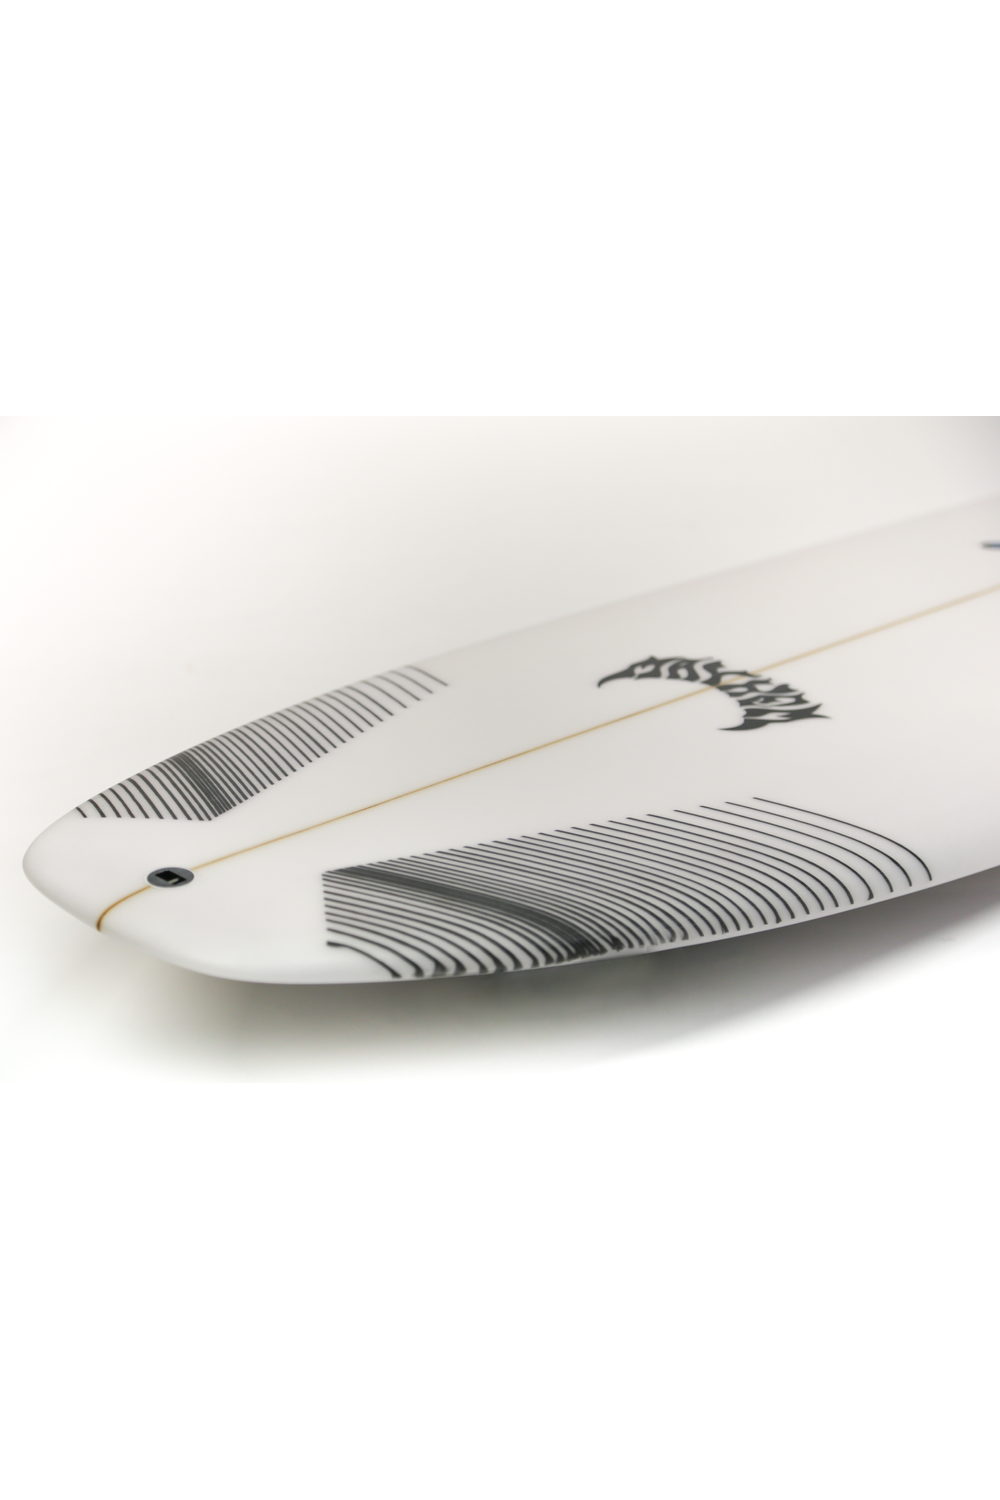 Lost Puddle Jumper, 5'9 Surfboard 38.00L PU Futures 5 Fins